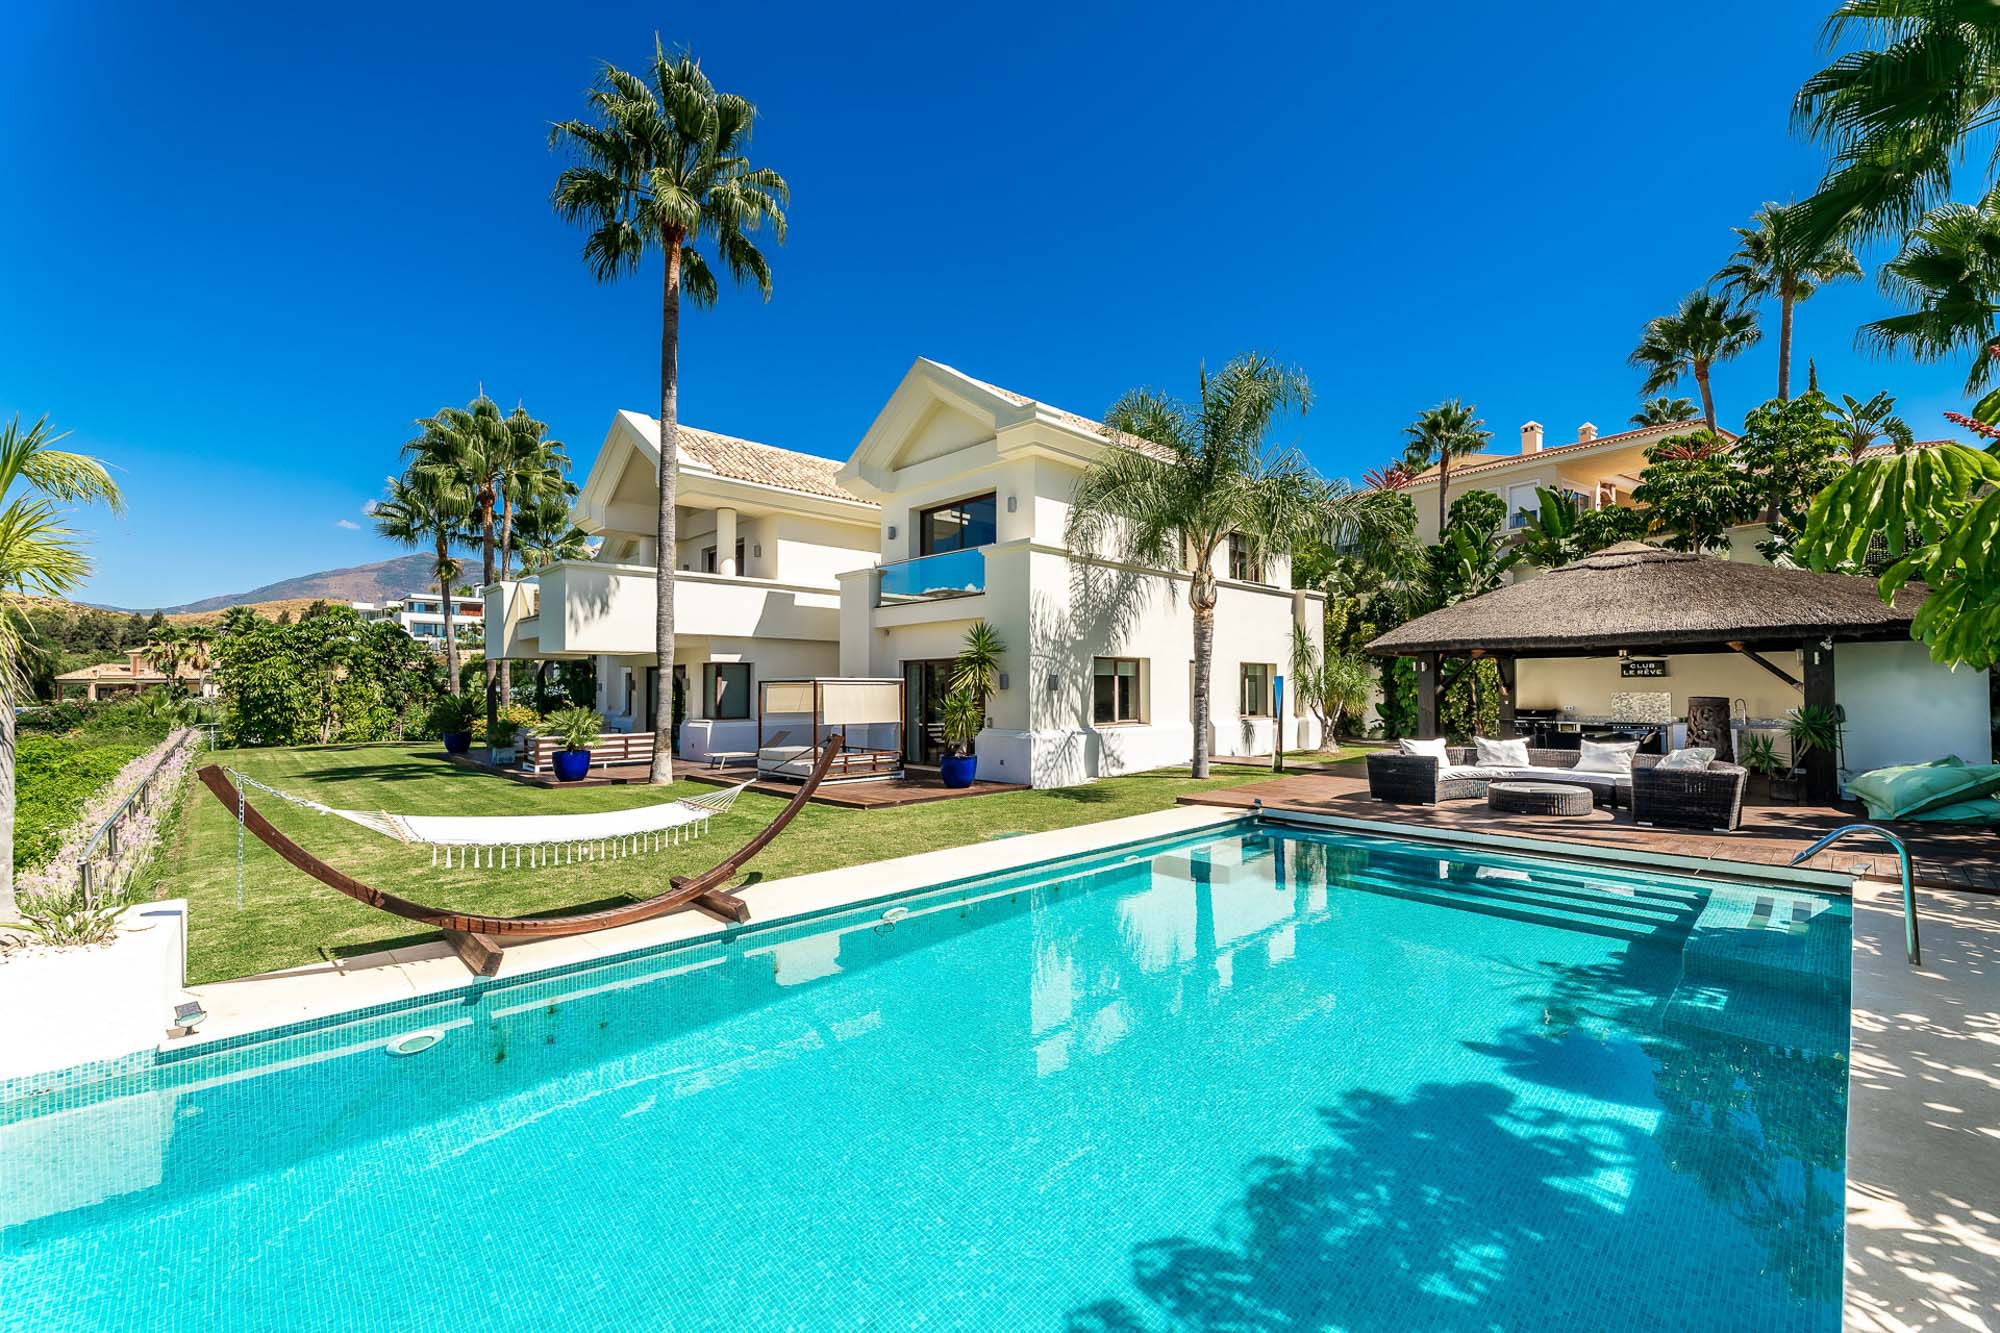 Luxury Villa Louis with Pool Heating